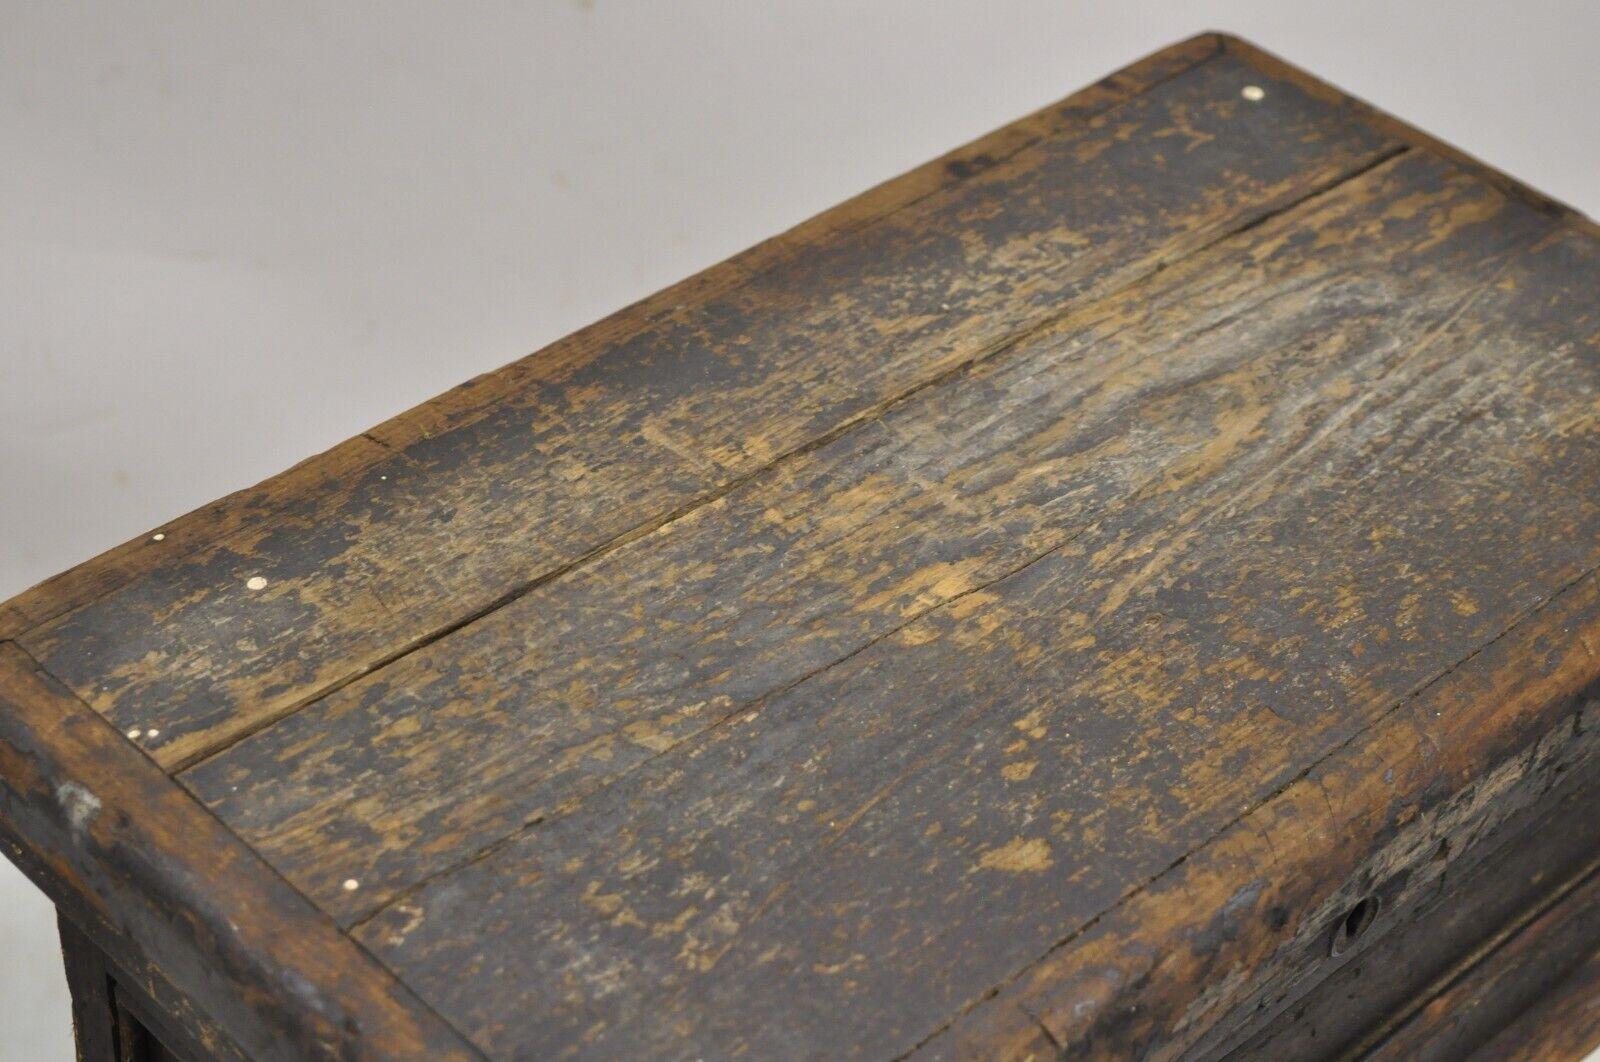 antique wooden tool box